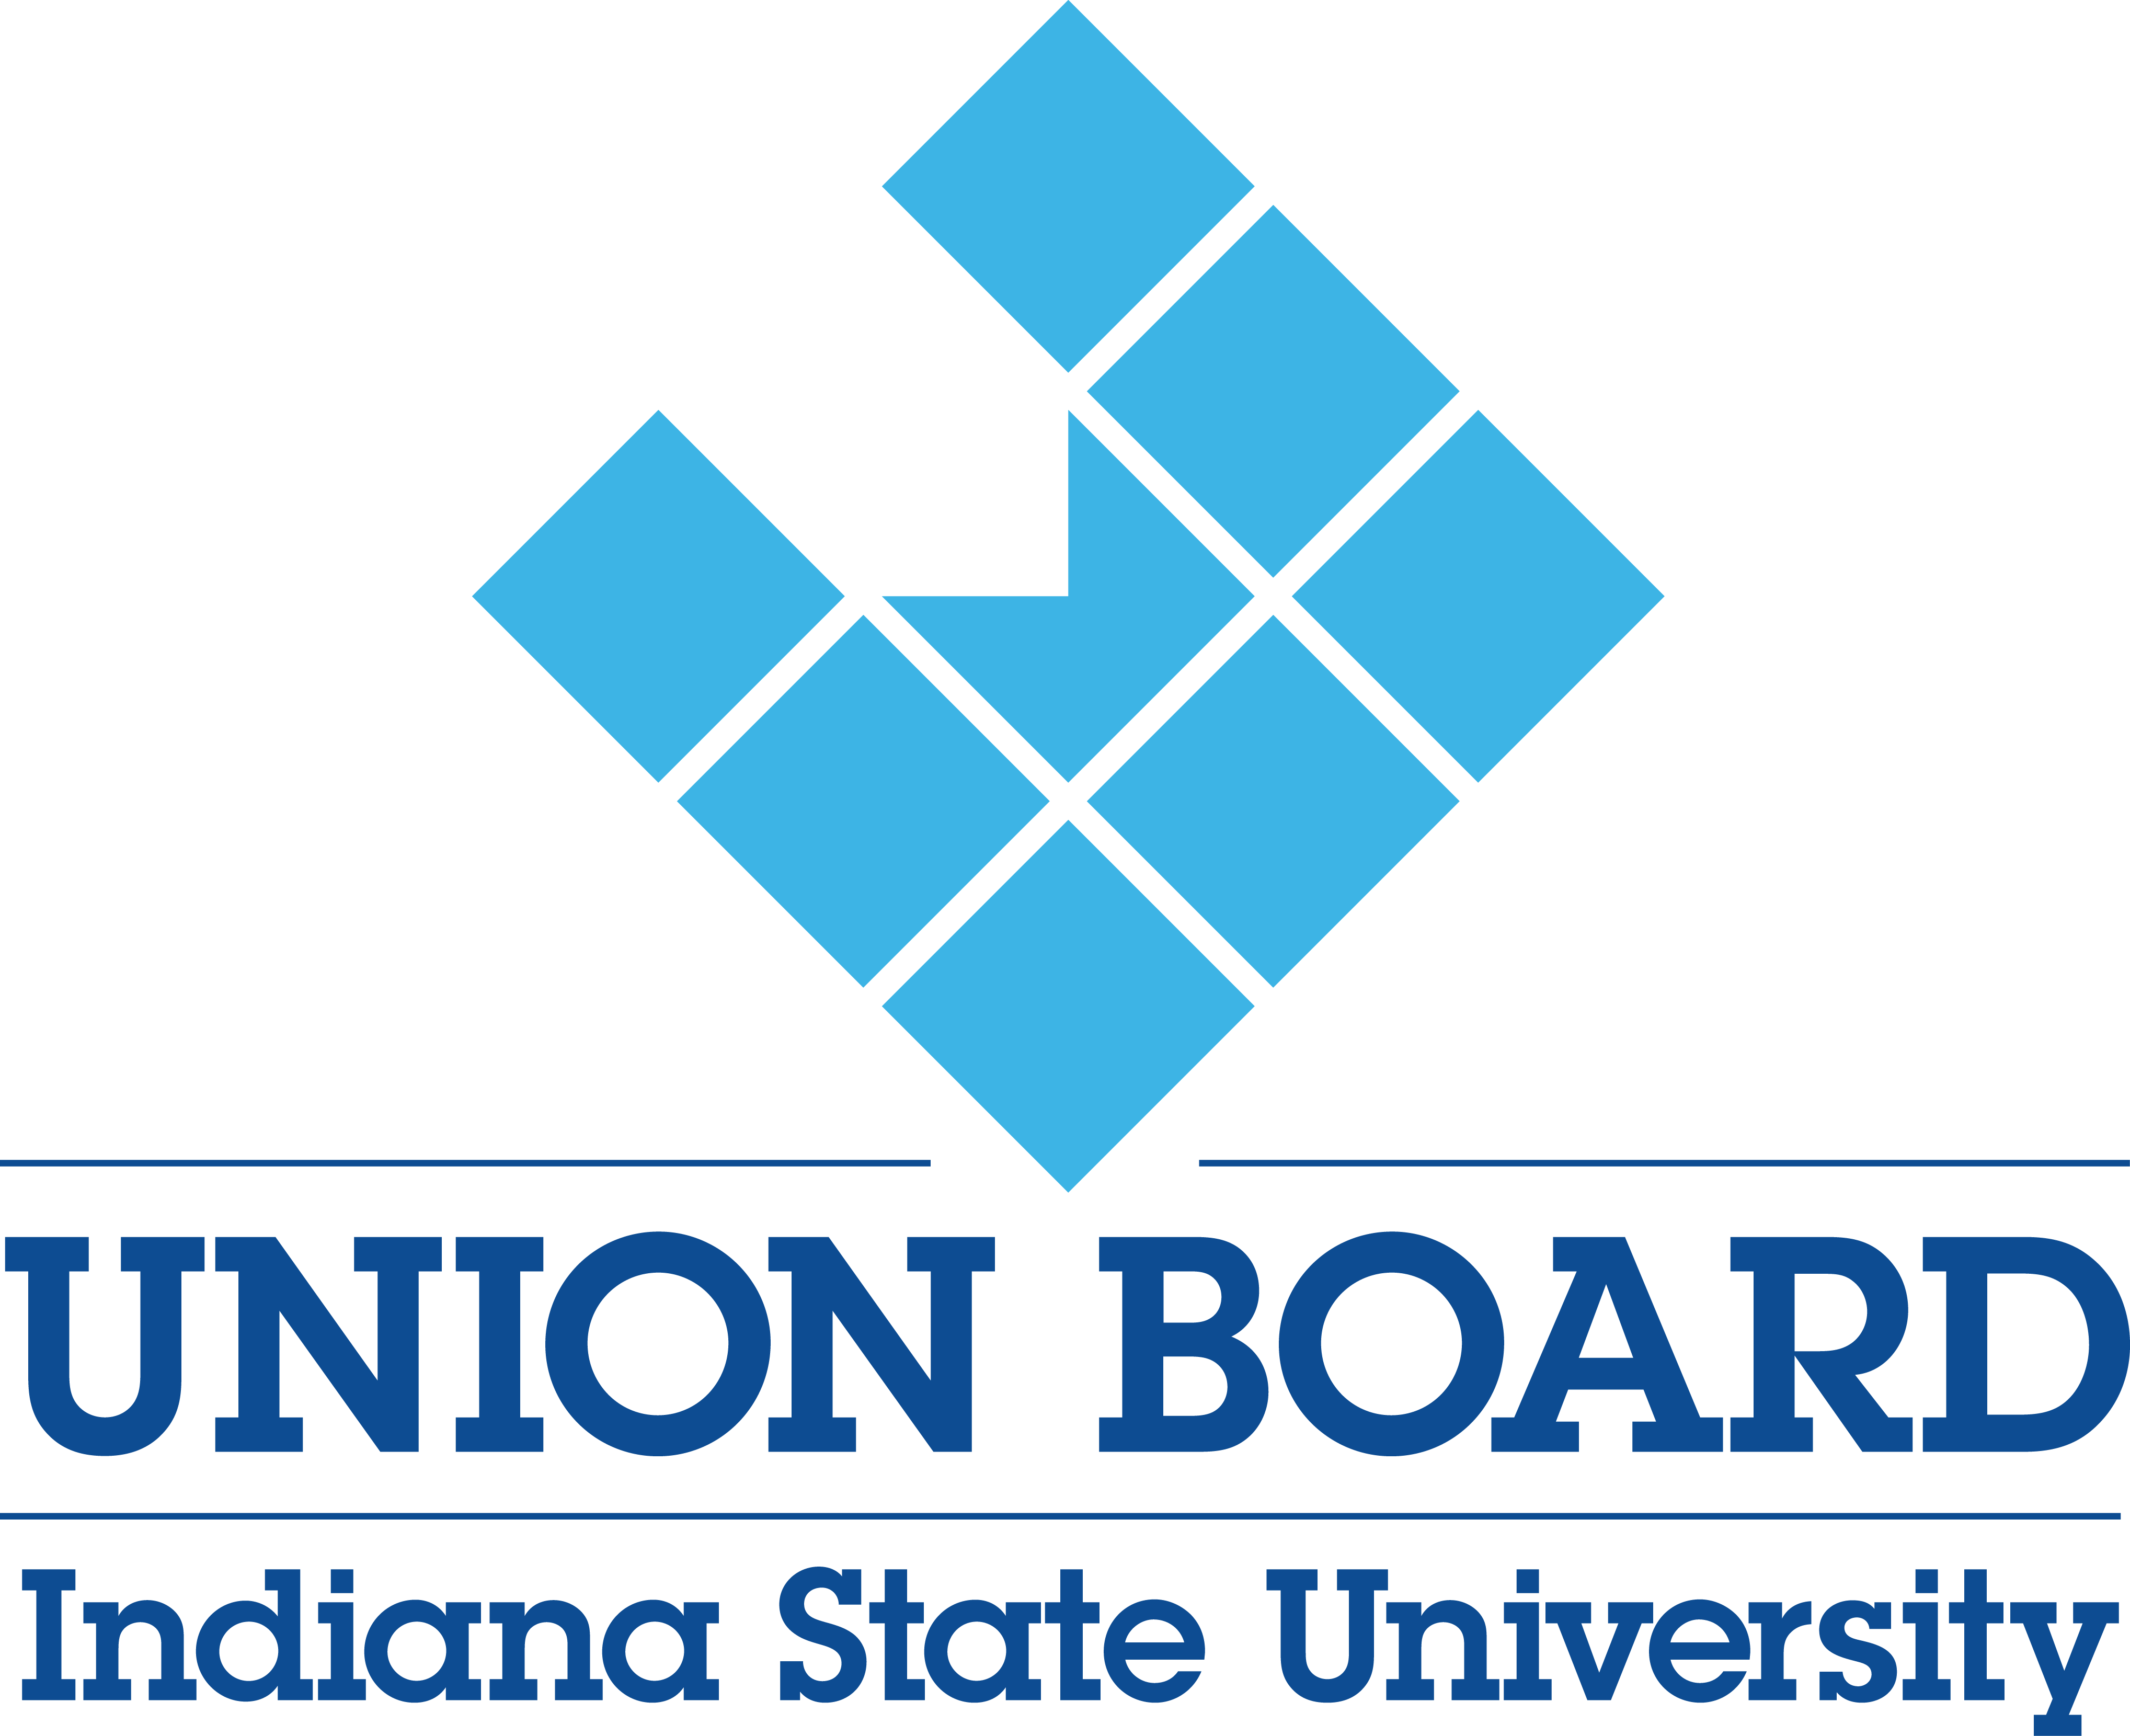 Union Board logo